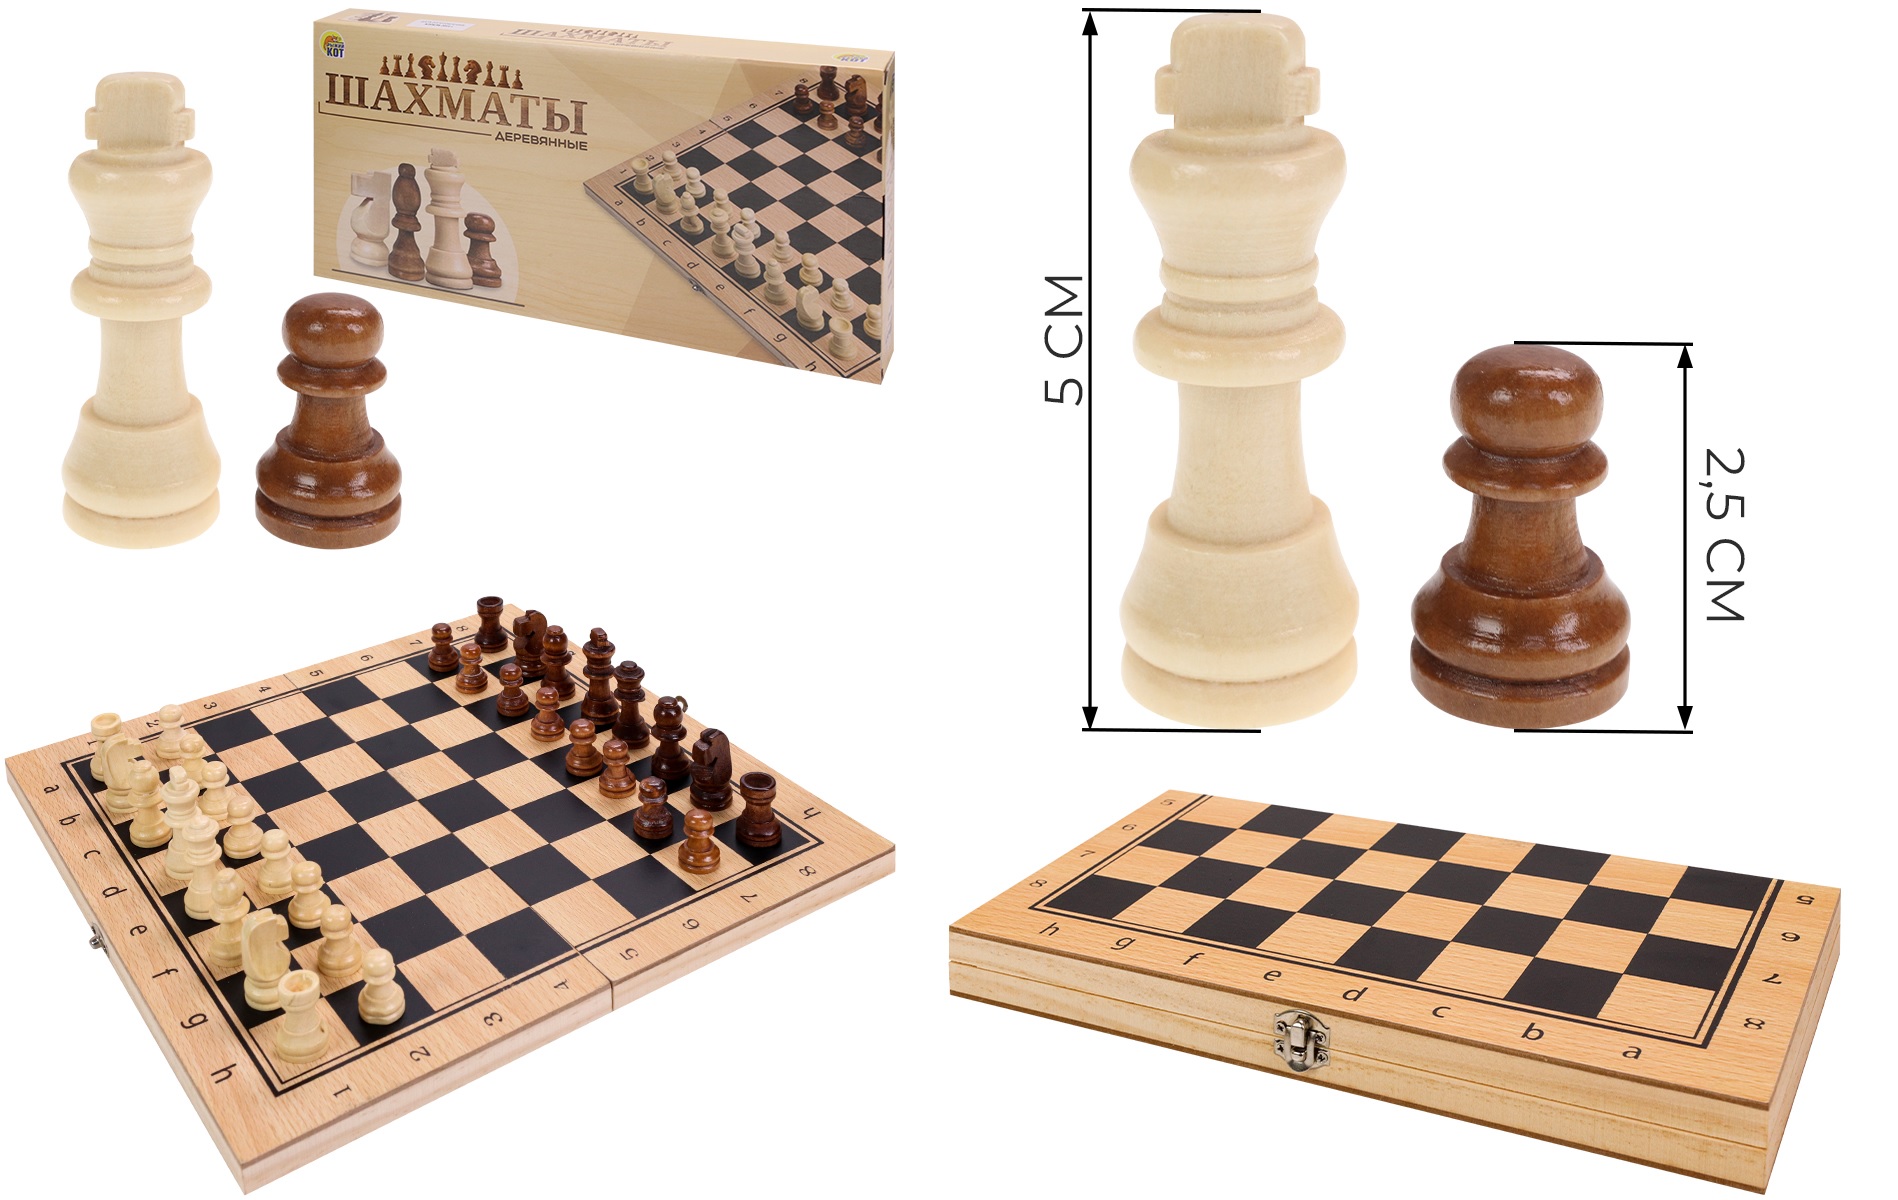 Я84132-0 Шахматы деревянные (29х14.5х3 см), фигуры дерево, в коробке (Арт. ИН-4132)